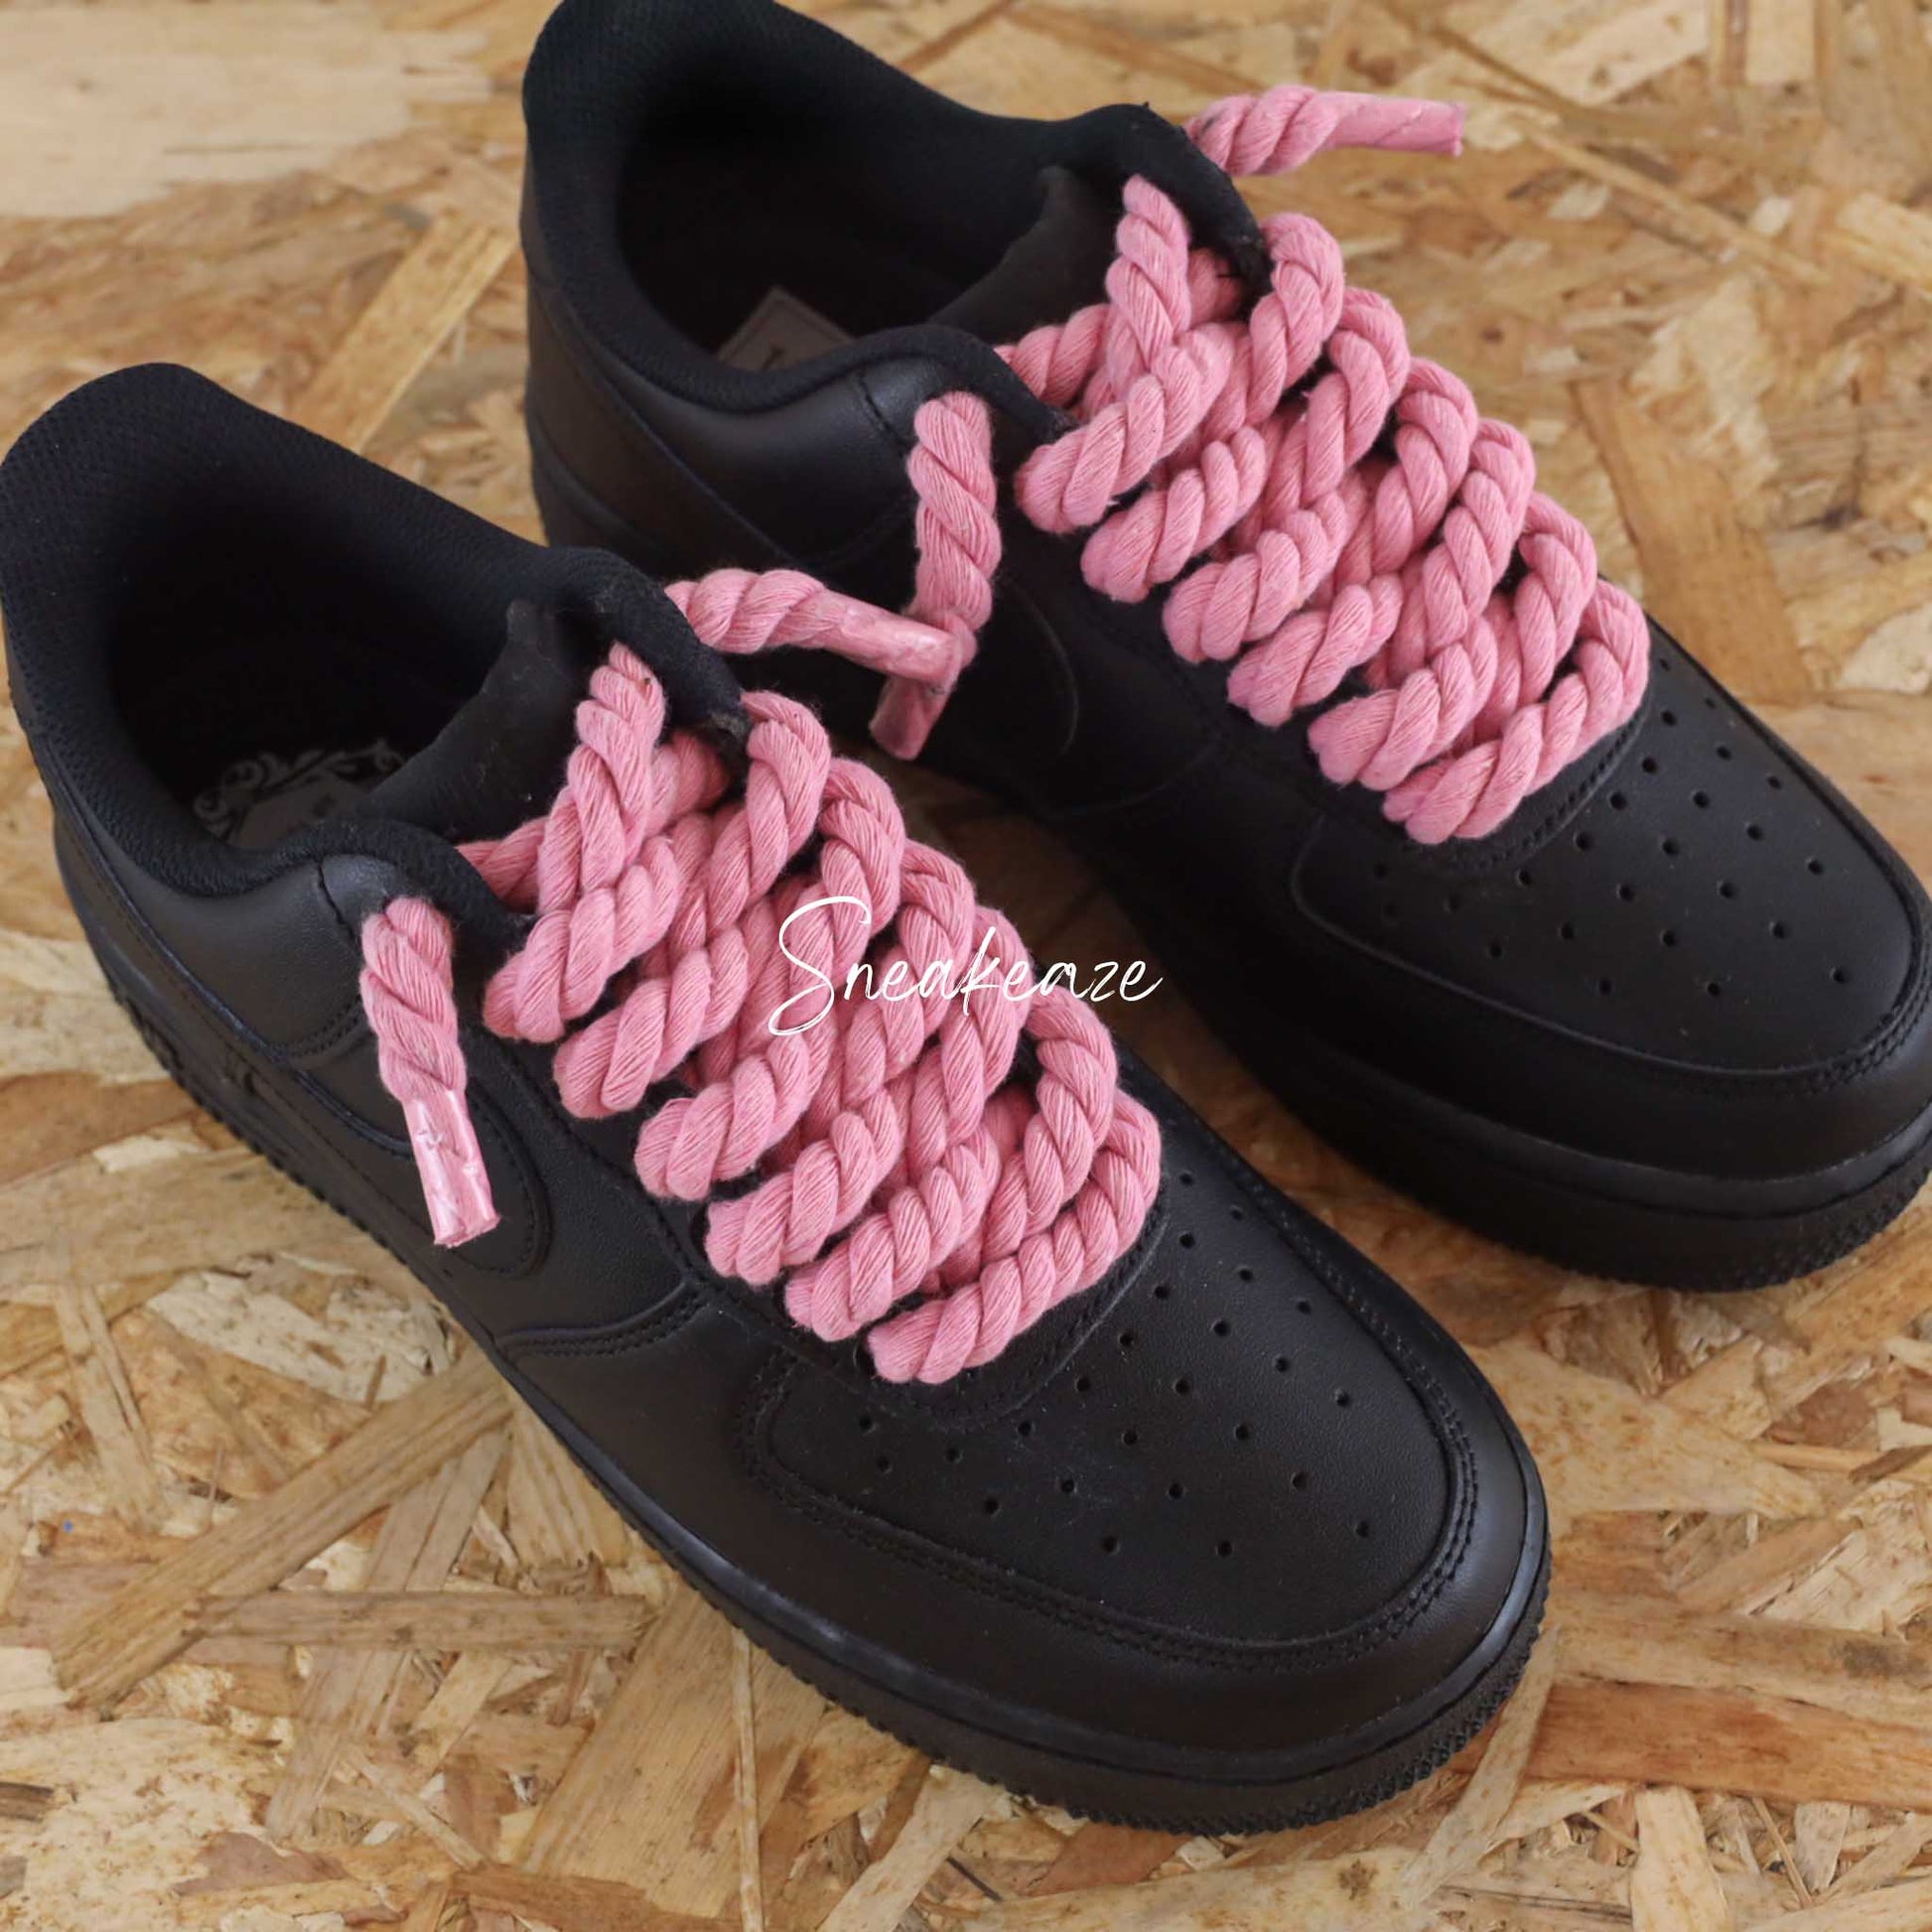 Baskets nike air force 1 black customs - ropes laces rose barbie - dye sneakeaze customs skz